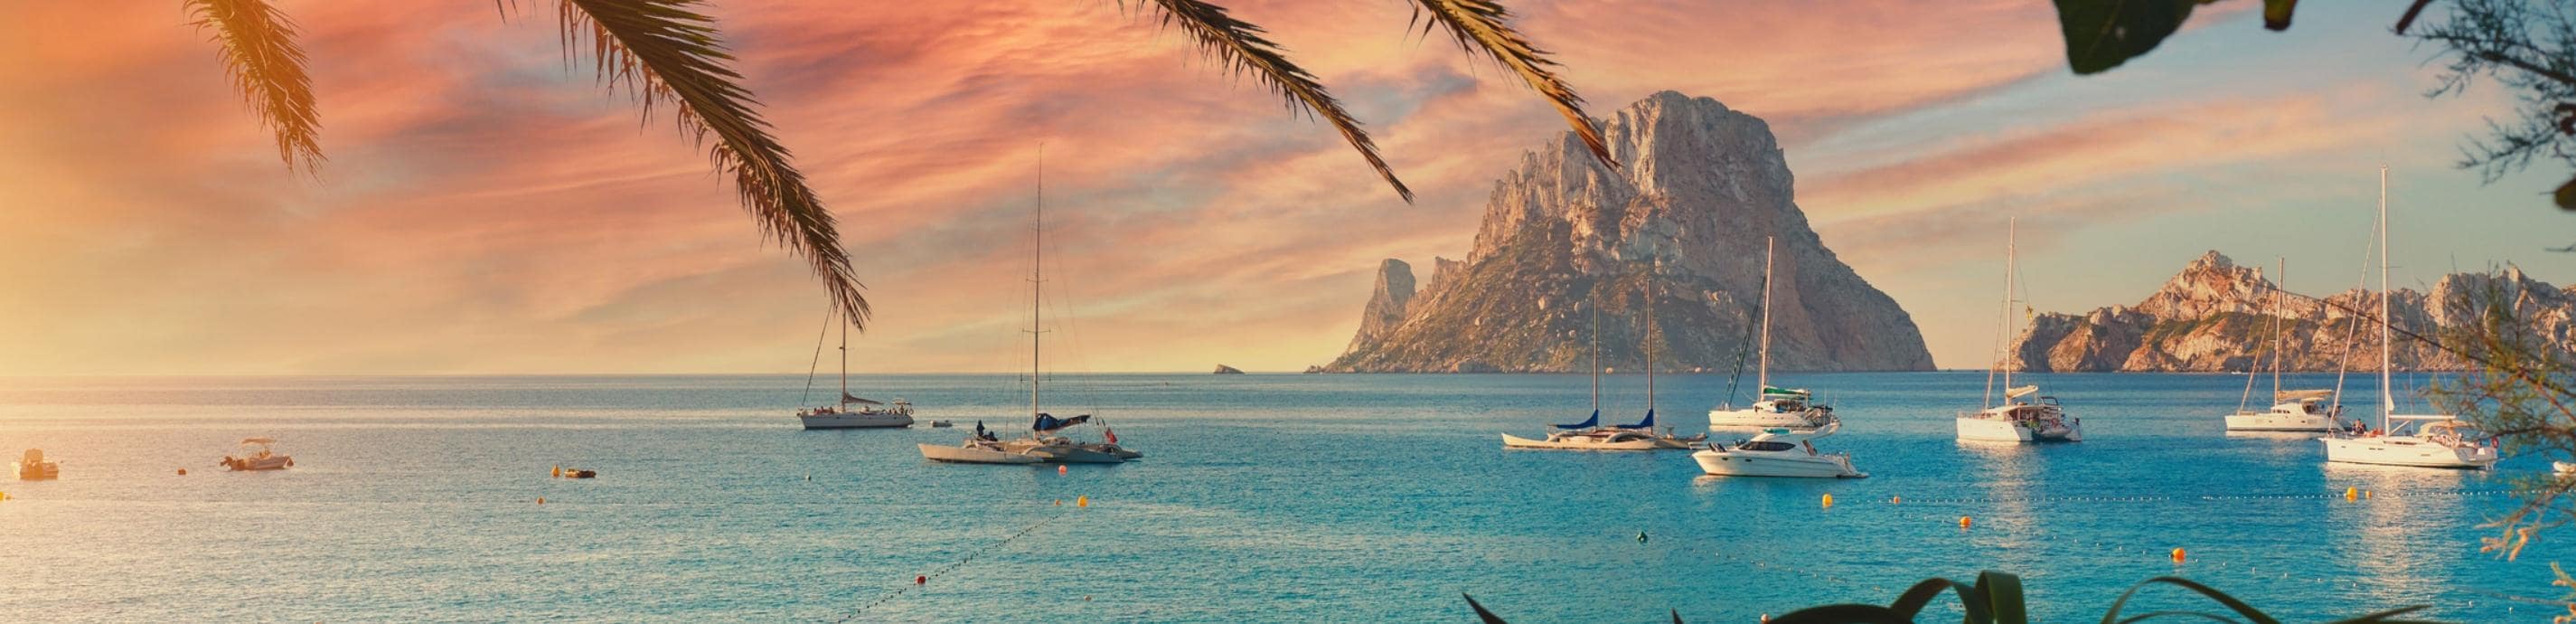 Vacanze alle Baleari a giugno | Eden Viaggi